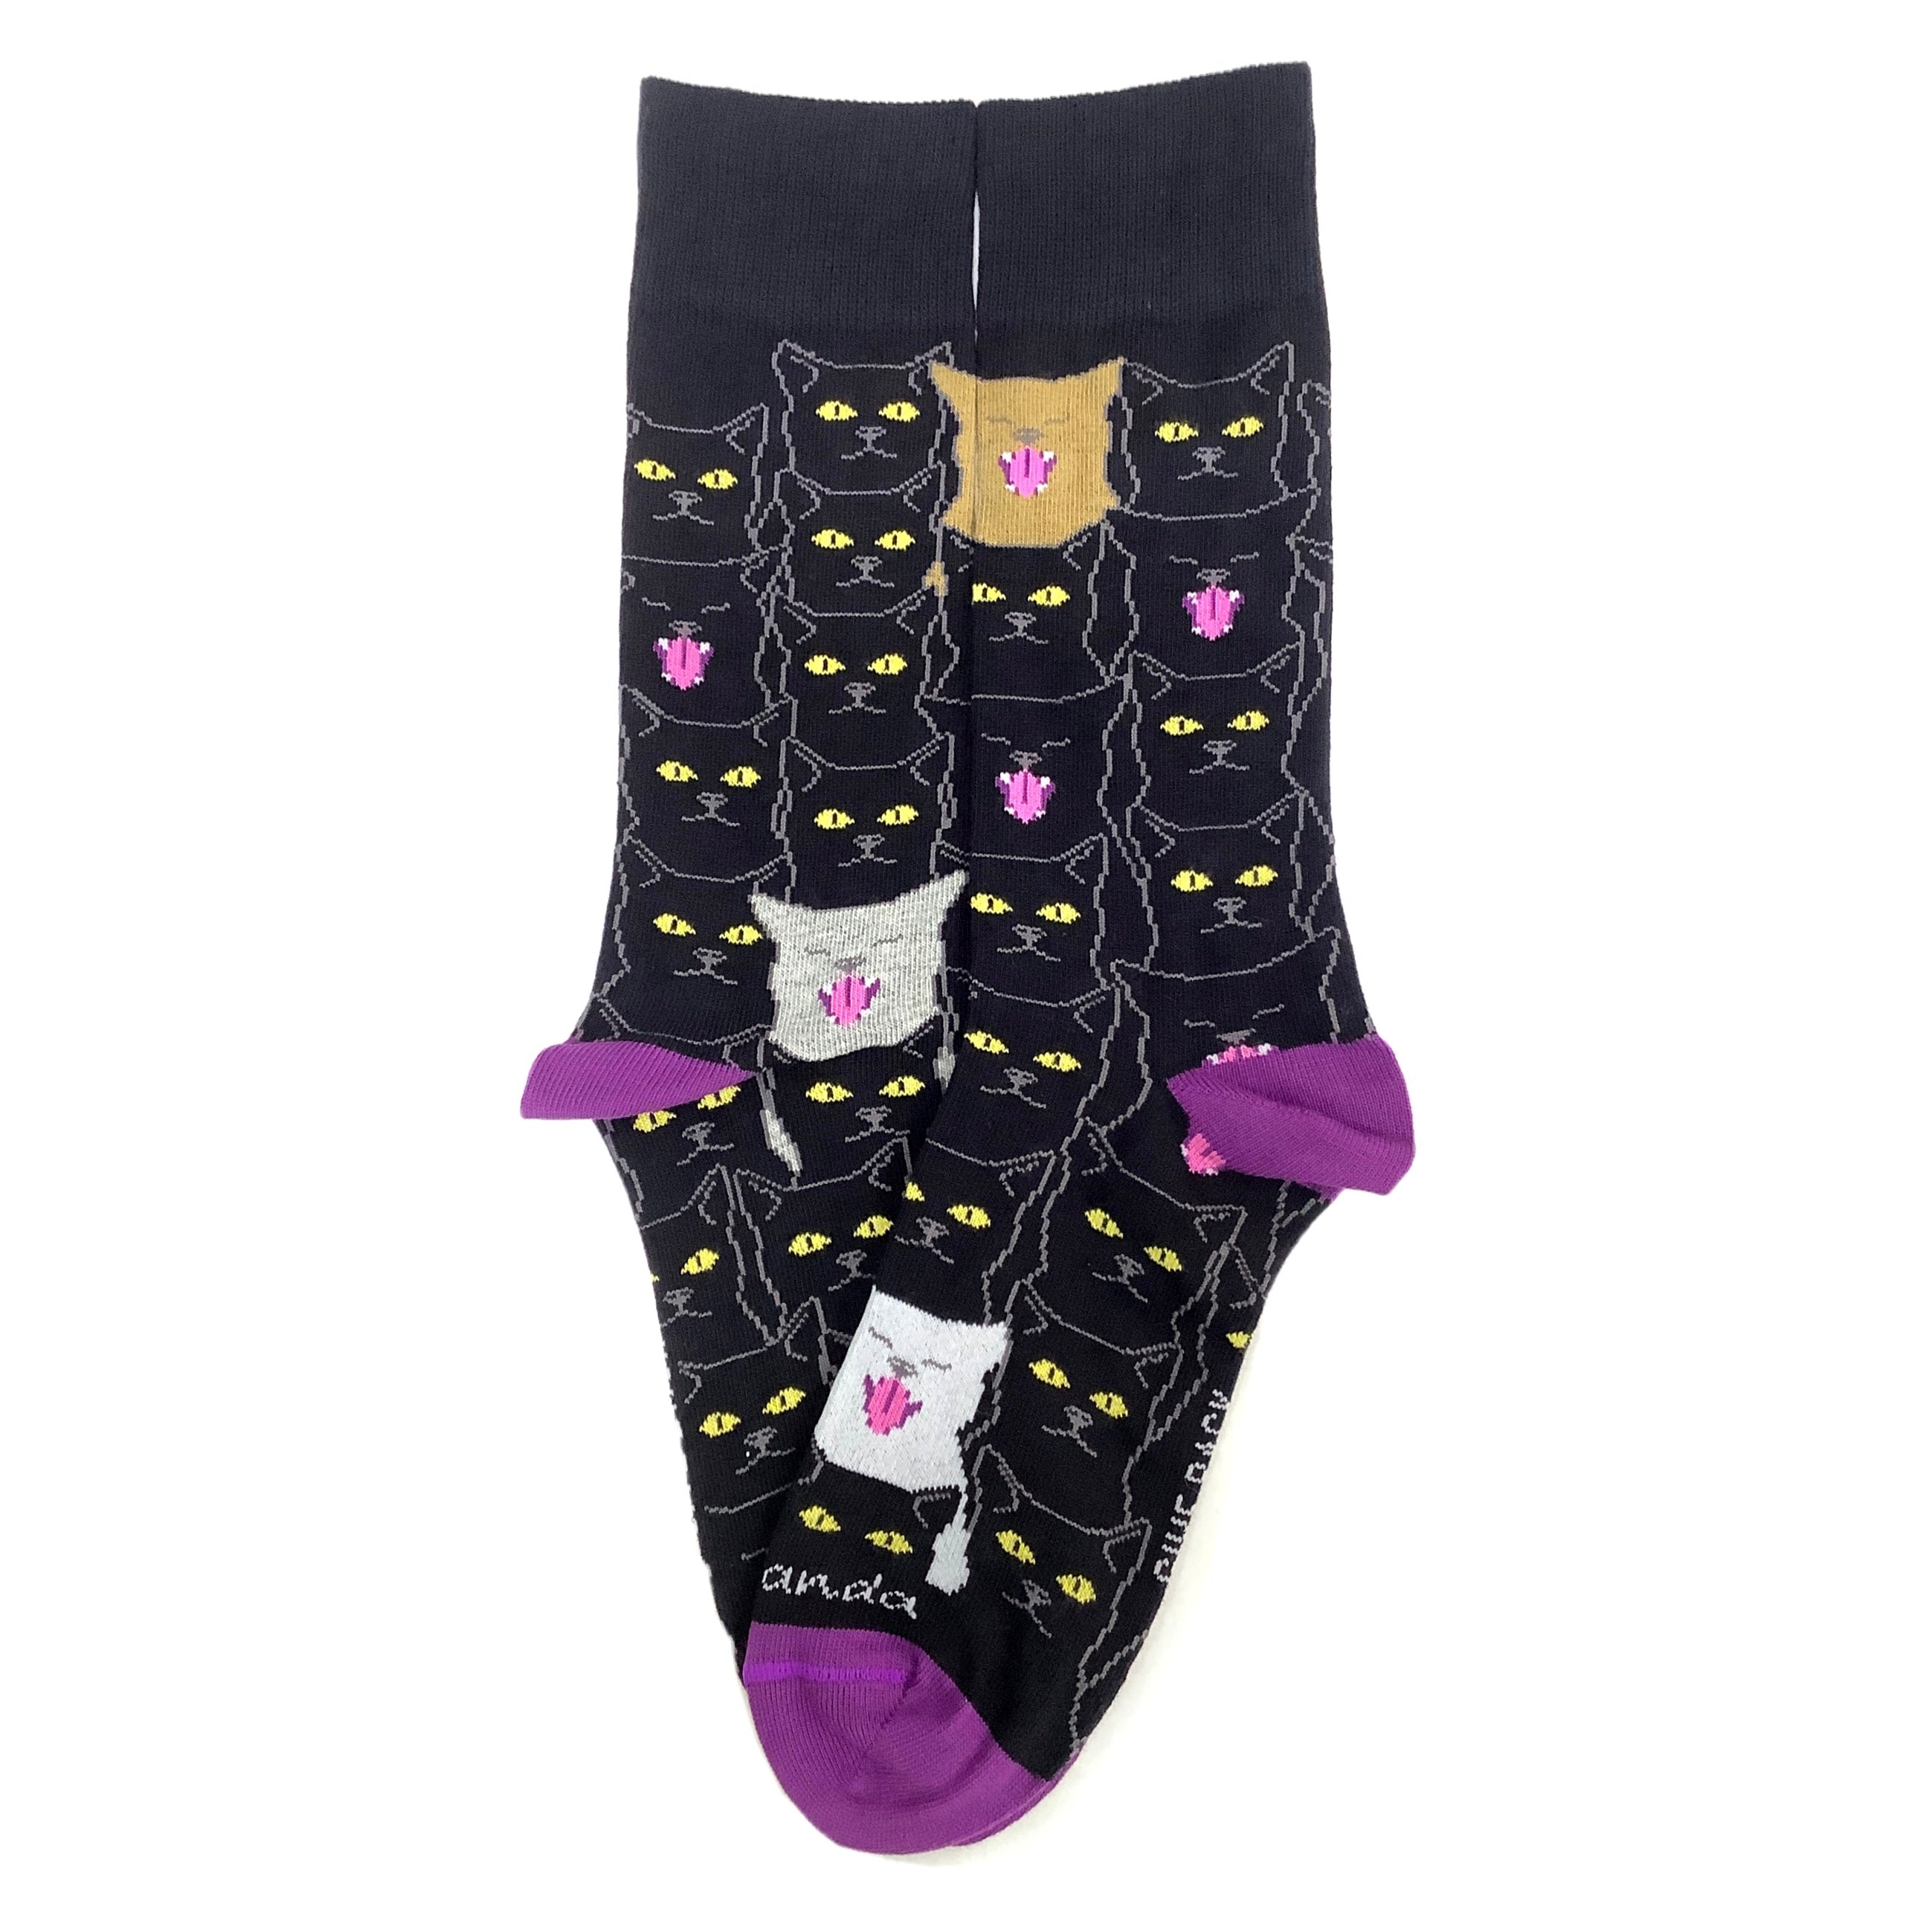 Cool Black Cat Pattern Socks from the Socks Panda